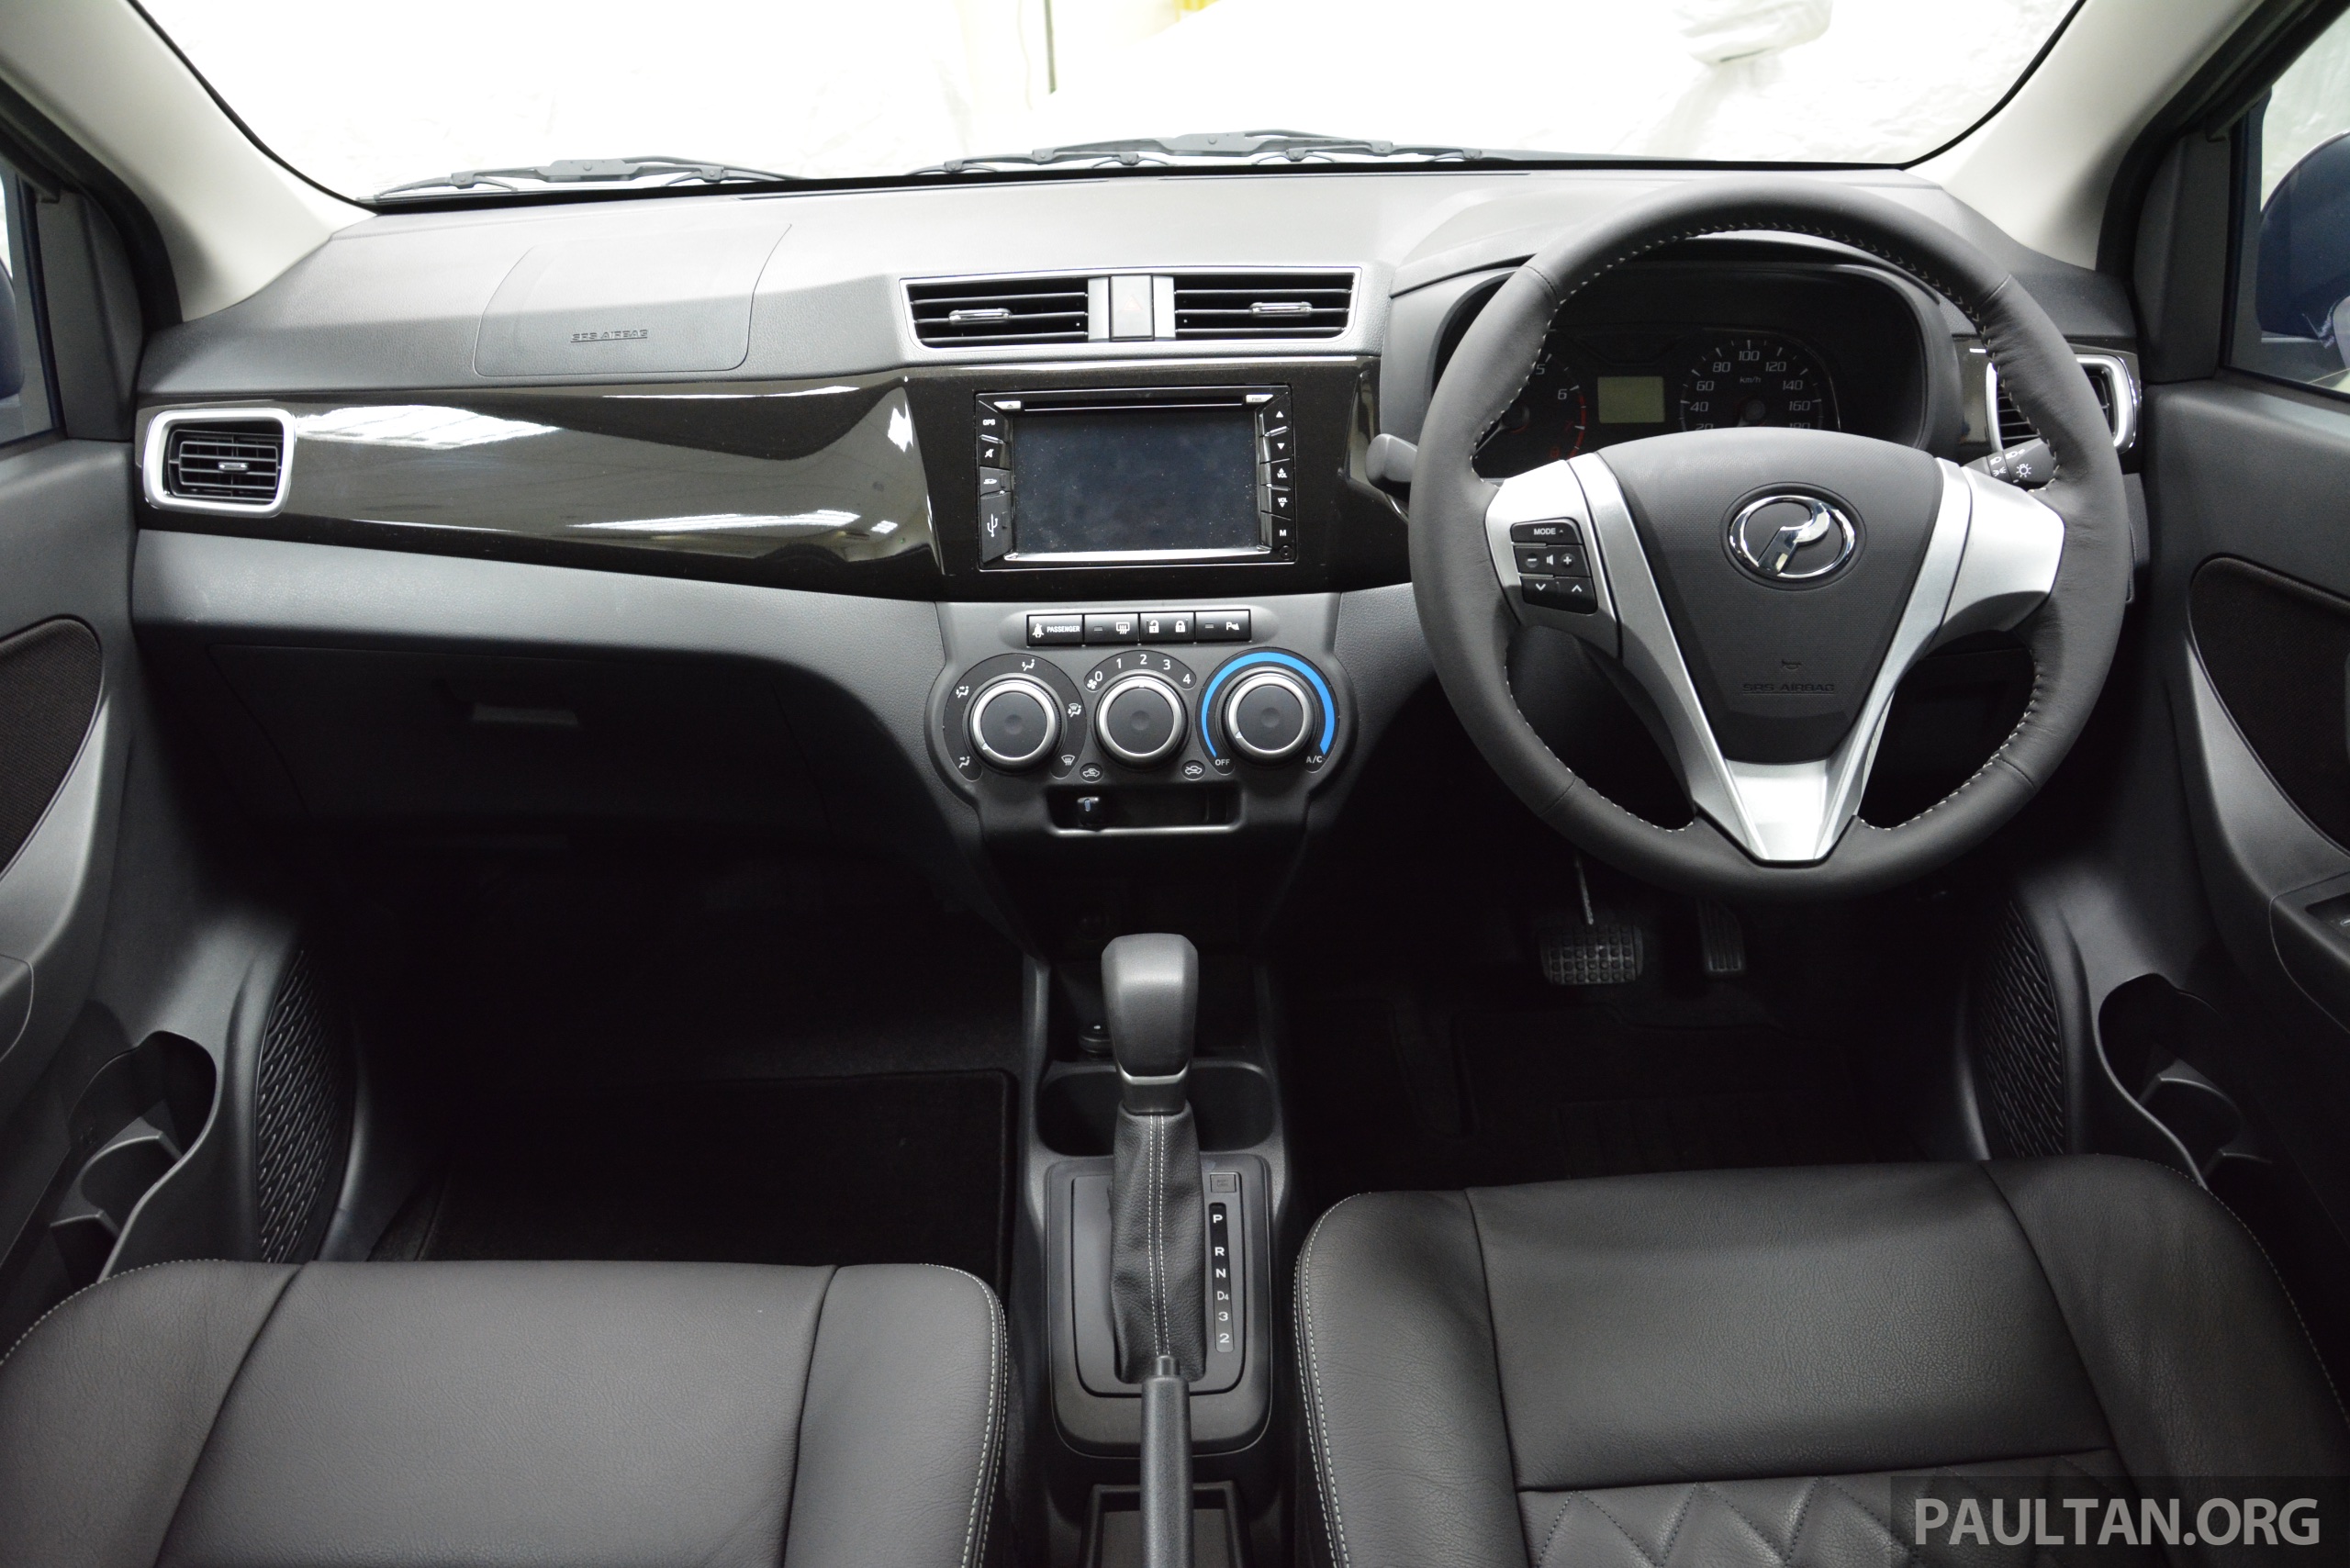 Perodua Bezza initial specifications of the new D63D sedan